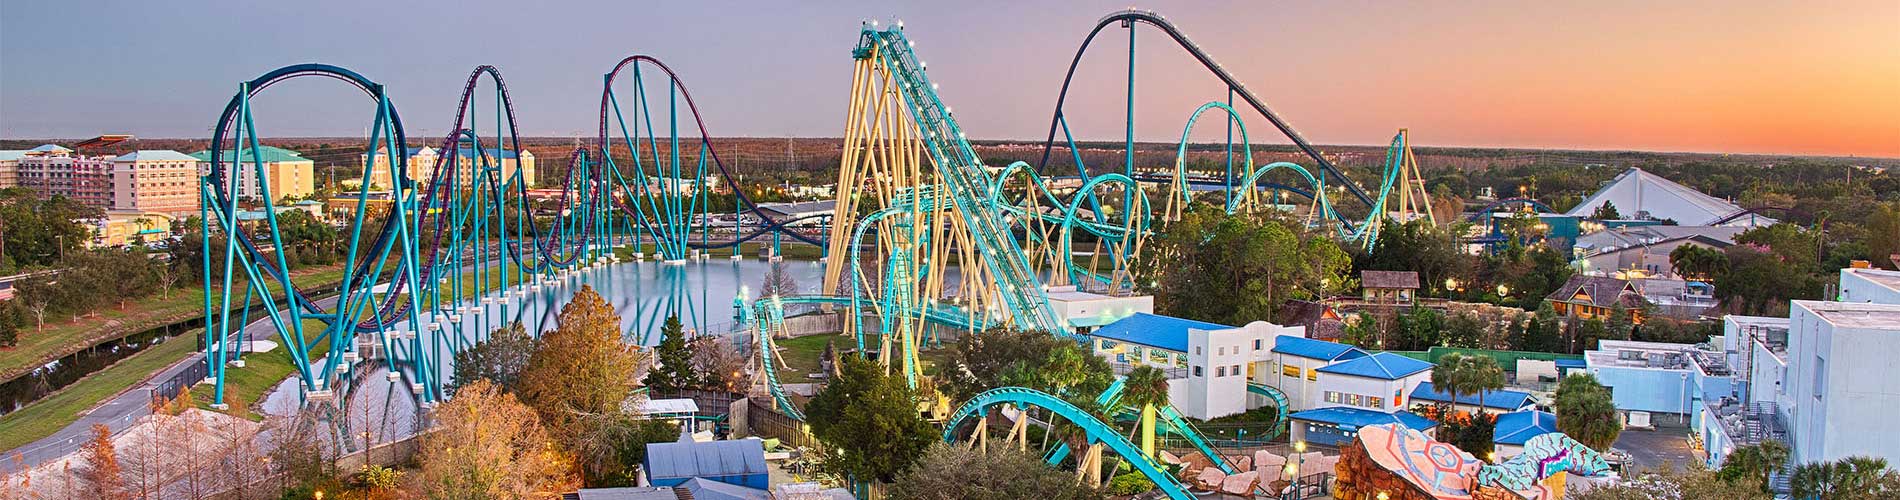 SeaWorld Orlando Roller Coasters